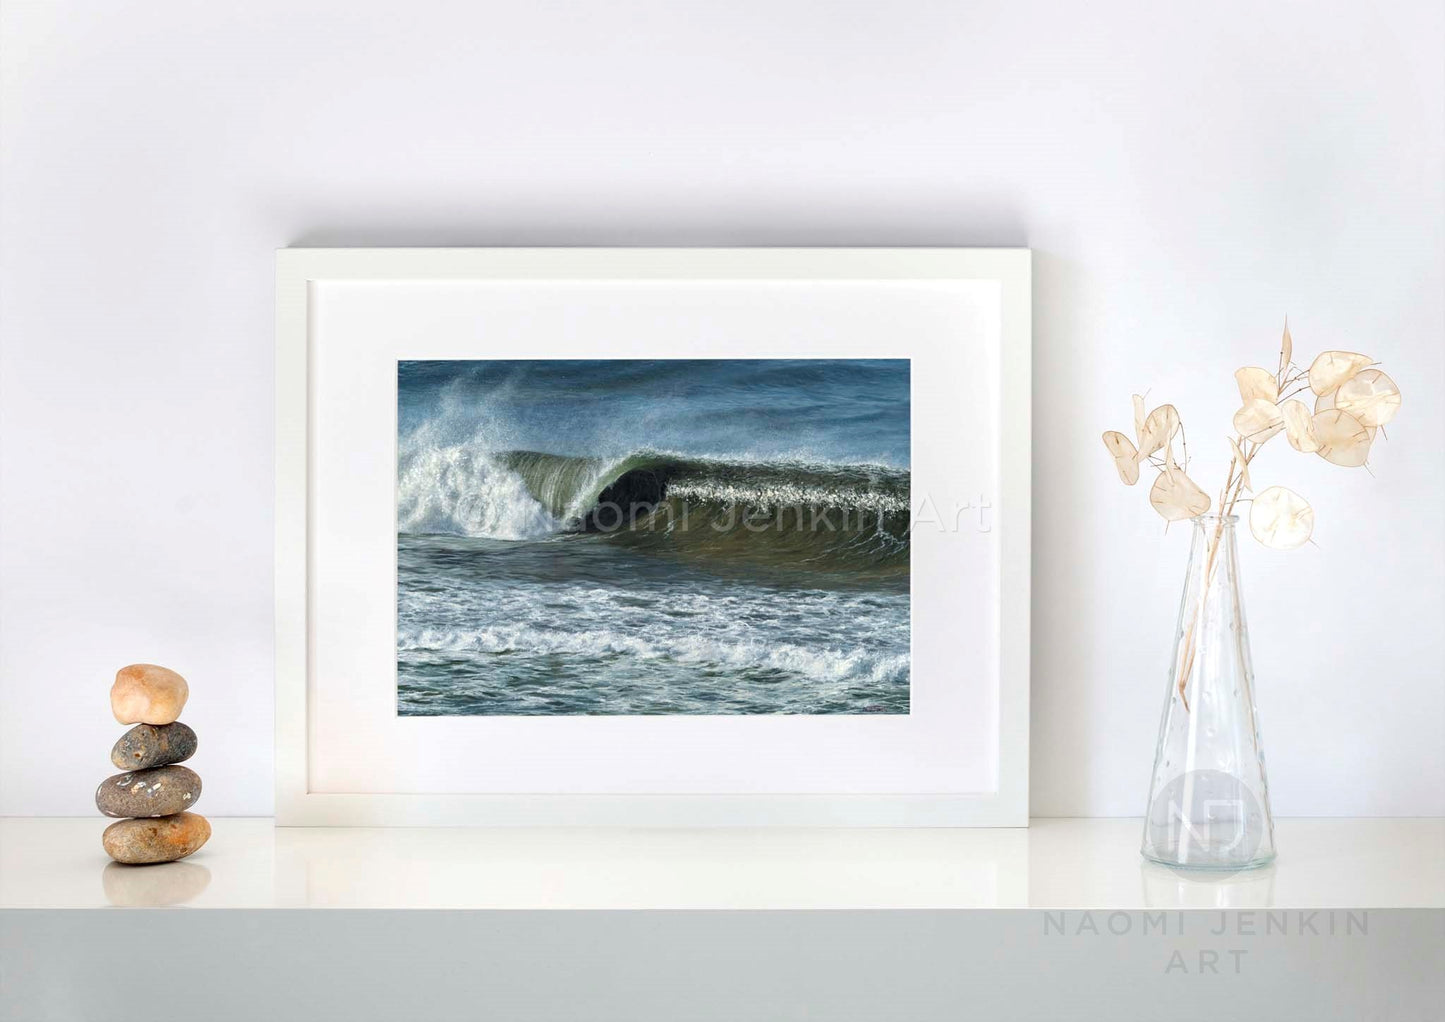 Framed wave print 'A Perfect Tube' by seascape artist Naomi Jenkin Art